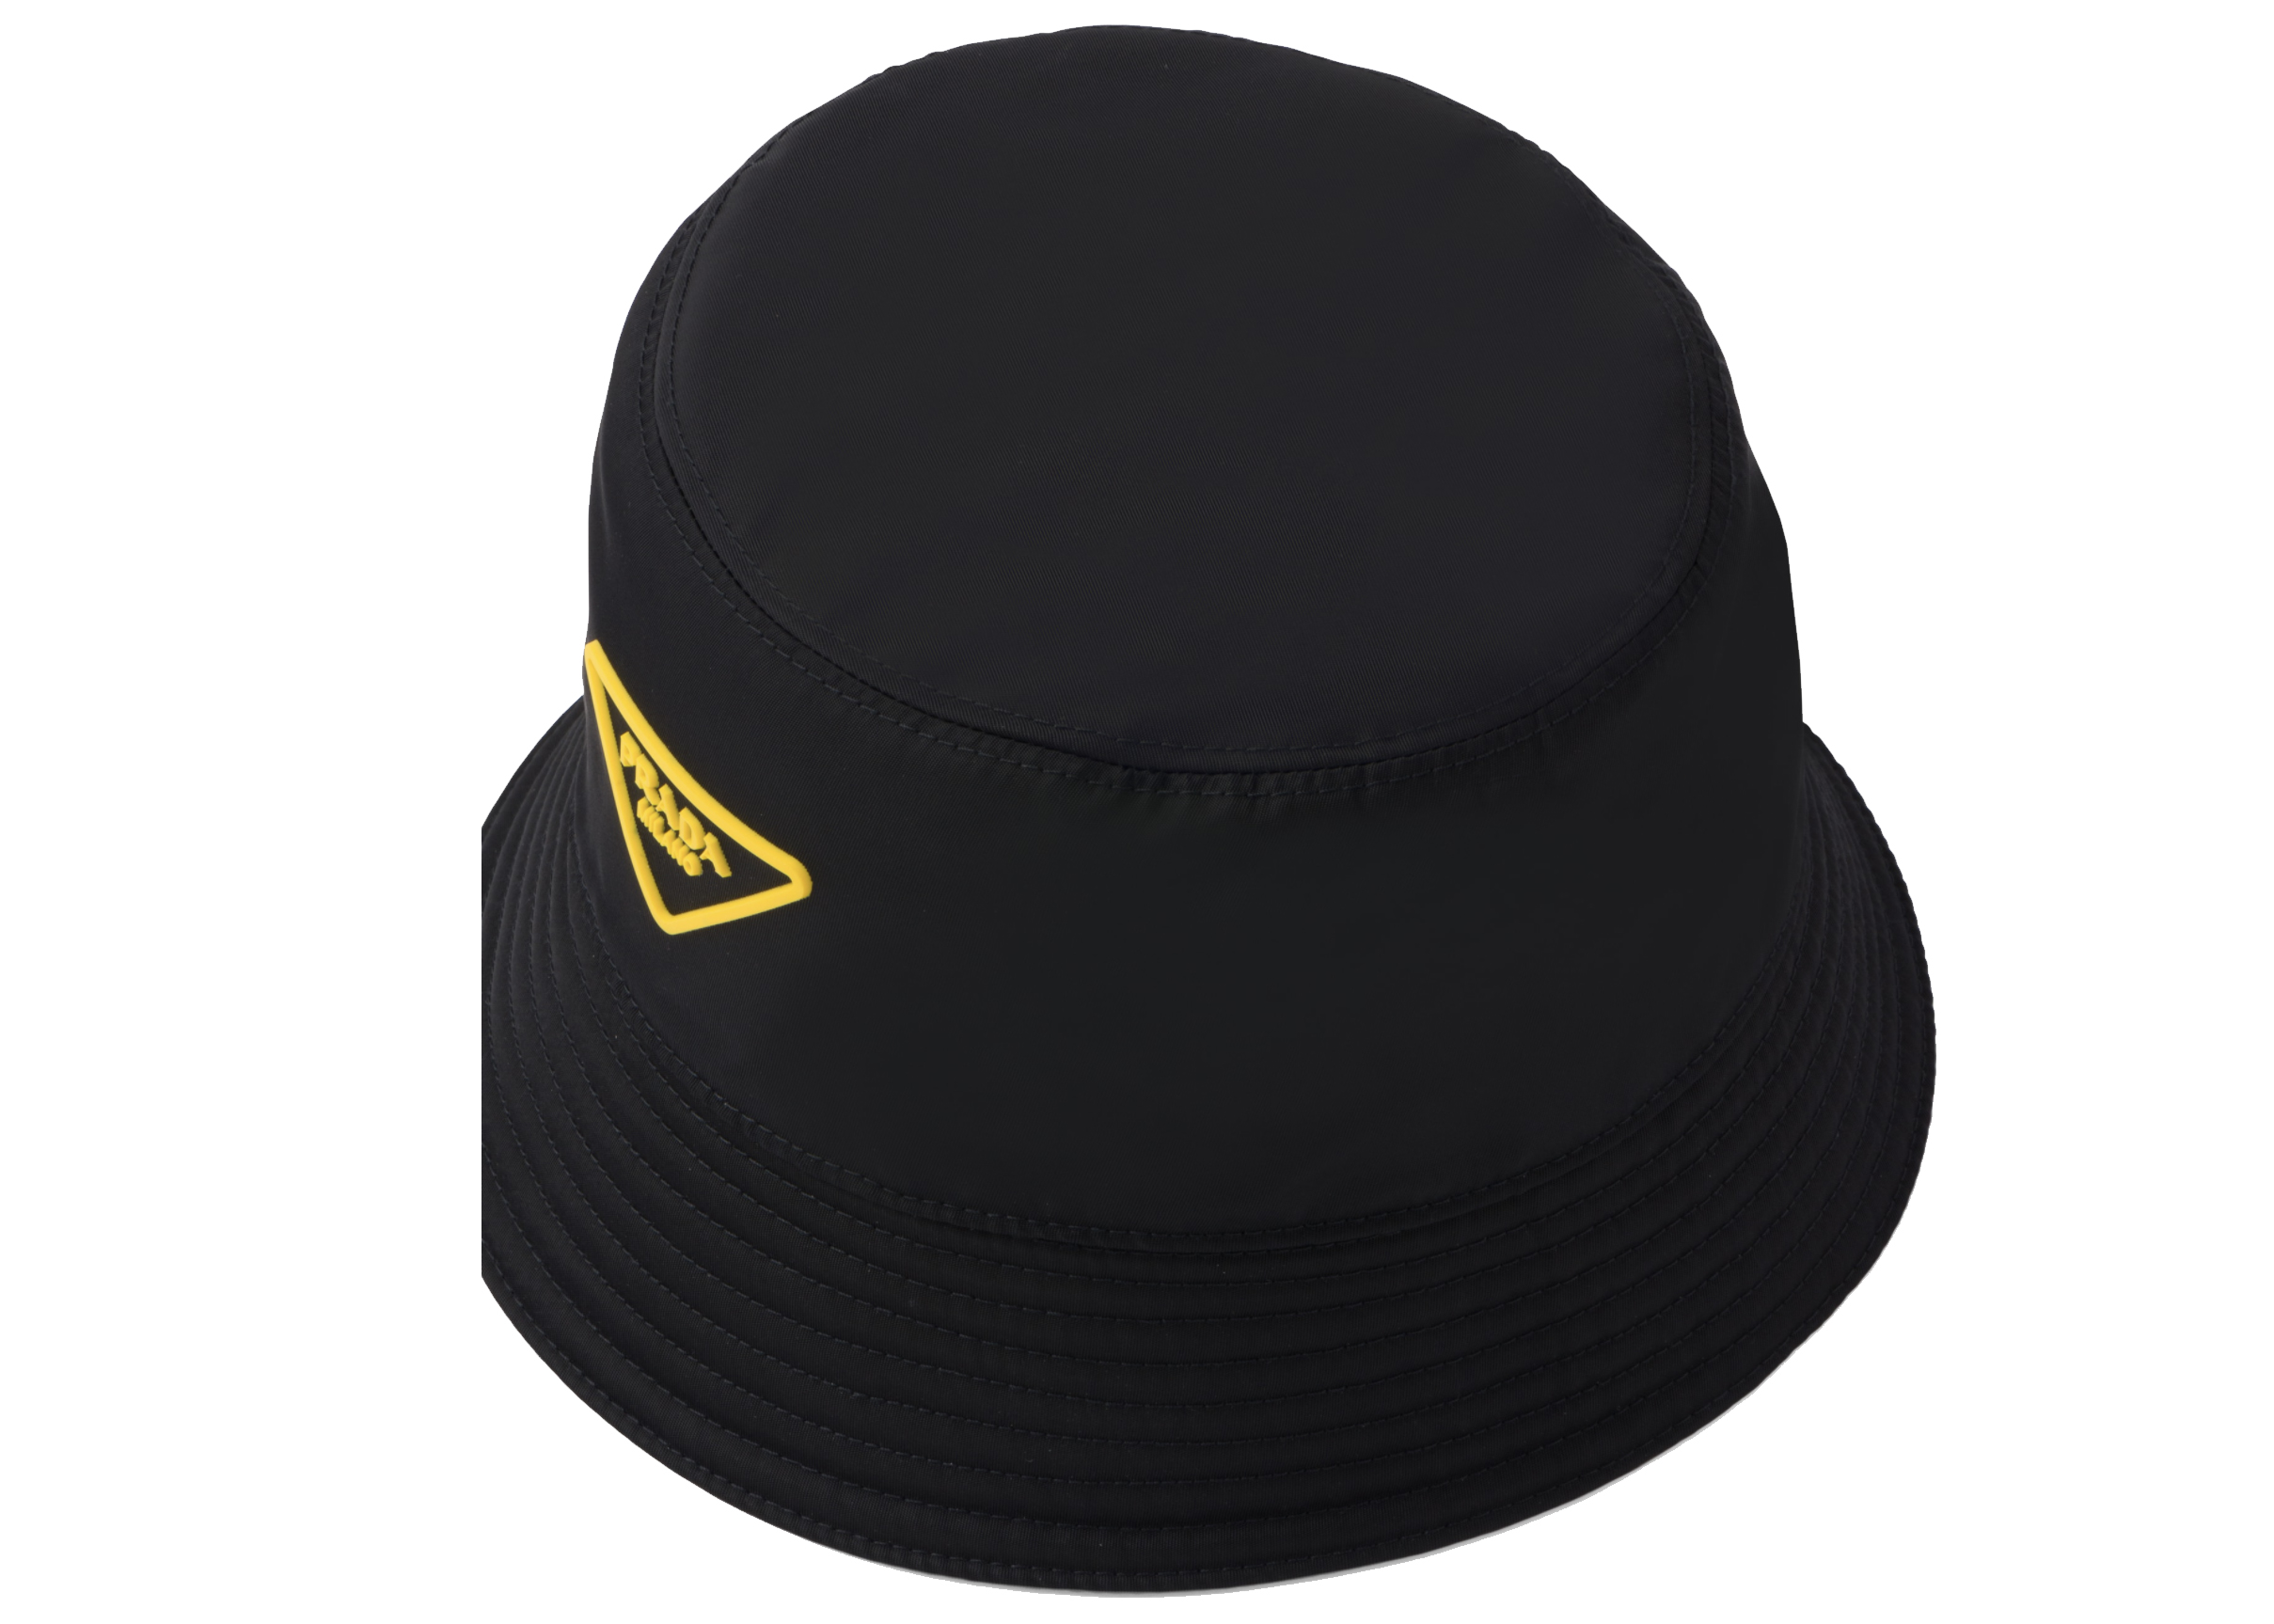 Prada Nylon Bucket Hat Black/Yellow